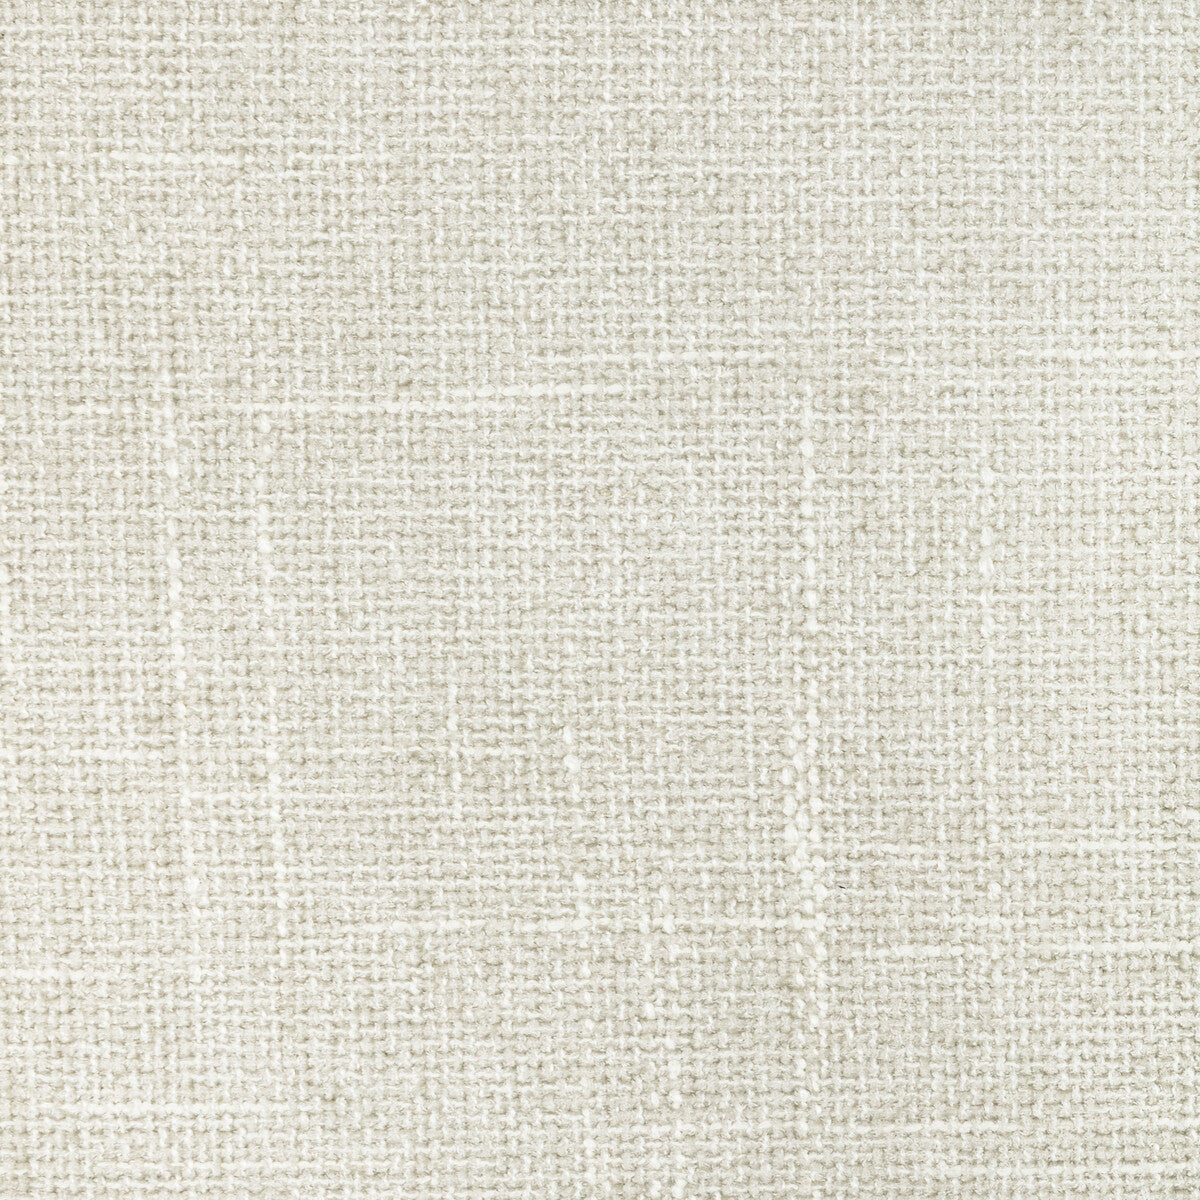 Kravet Smart fabric in 36579-1111 color - pattern 36579.1111.0 - by Kravet Smart in the Performance Kravetarmor collection